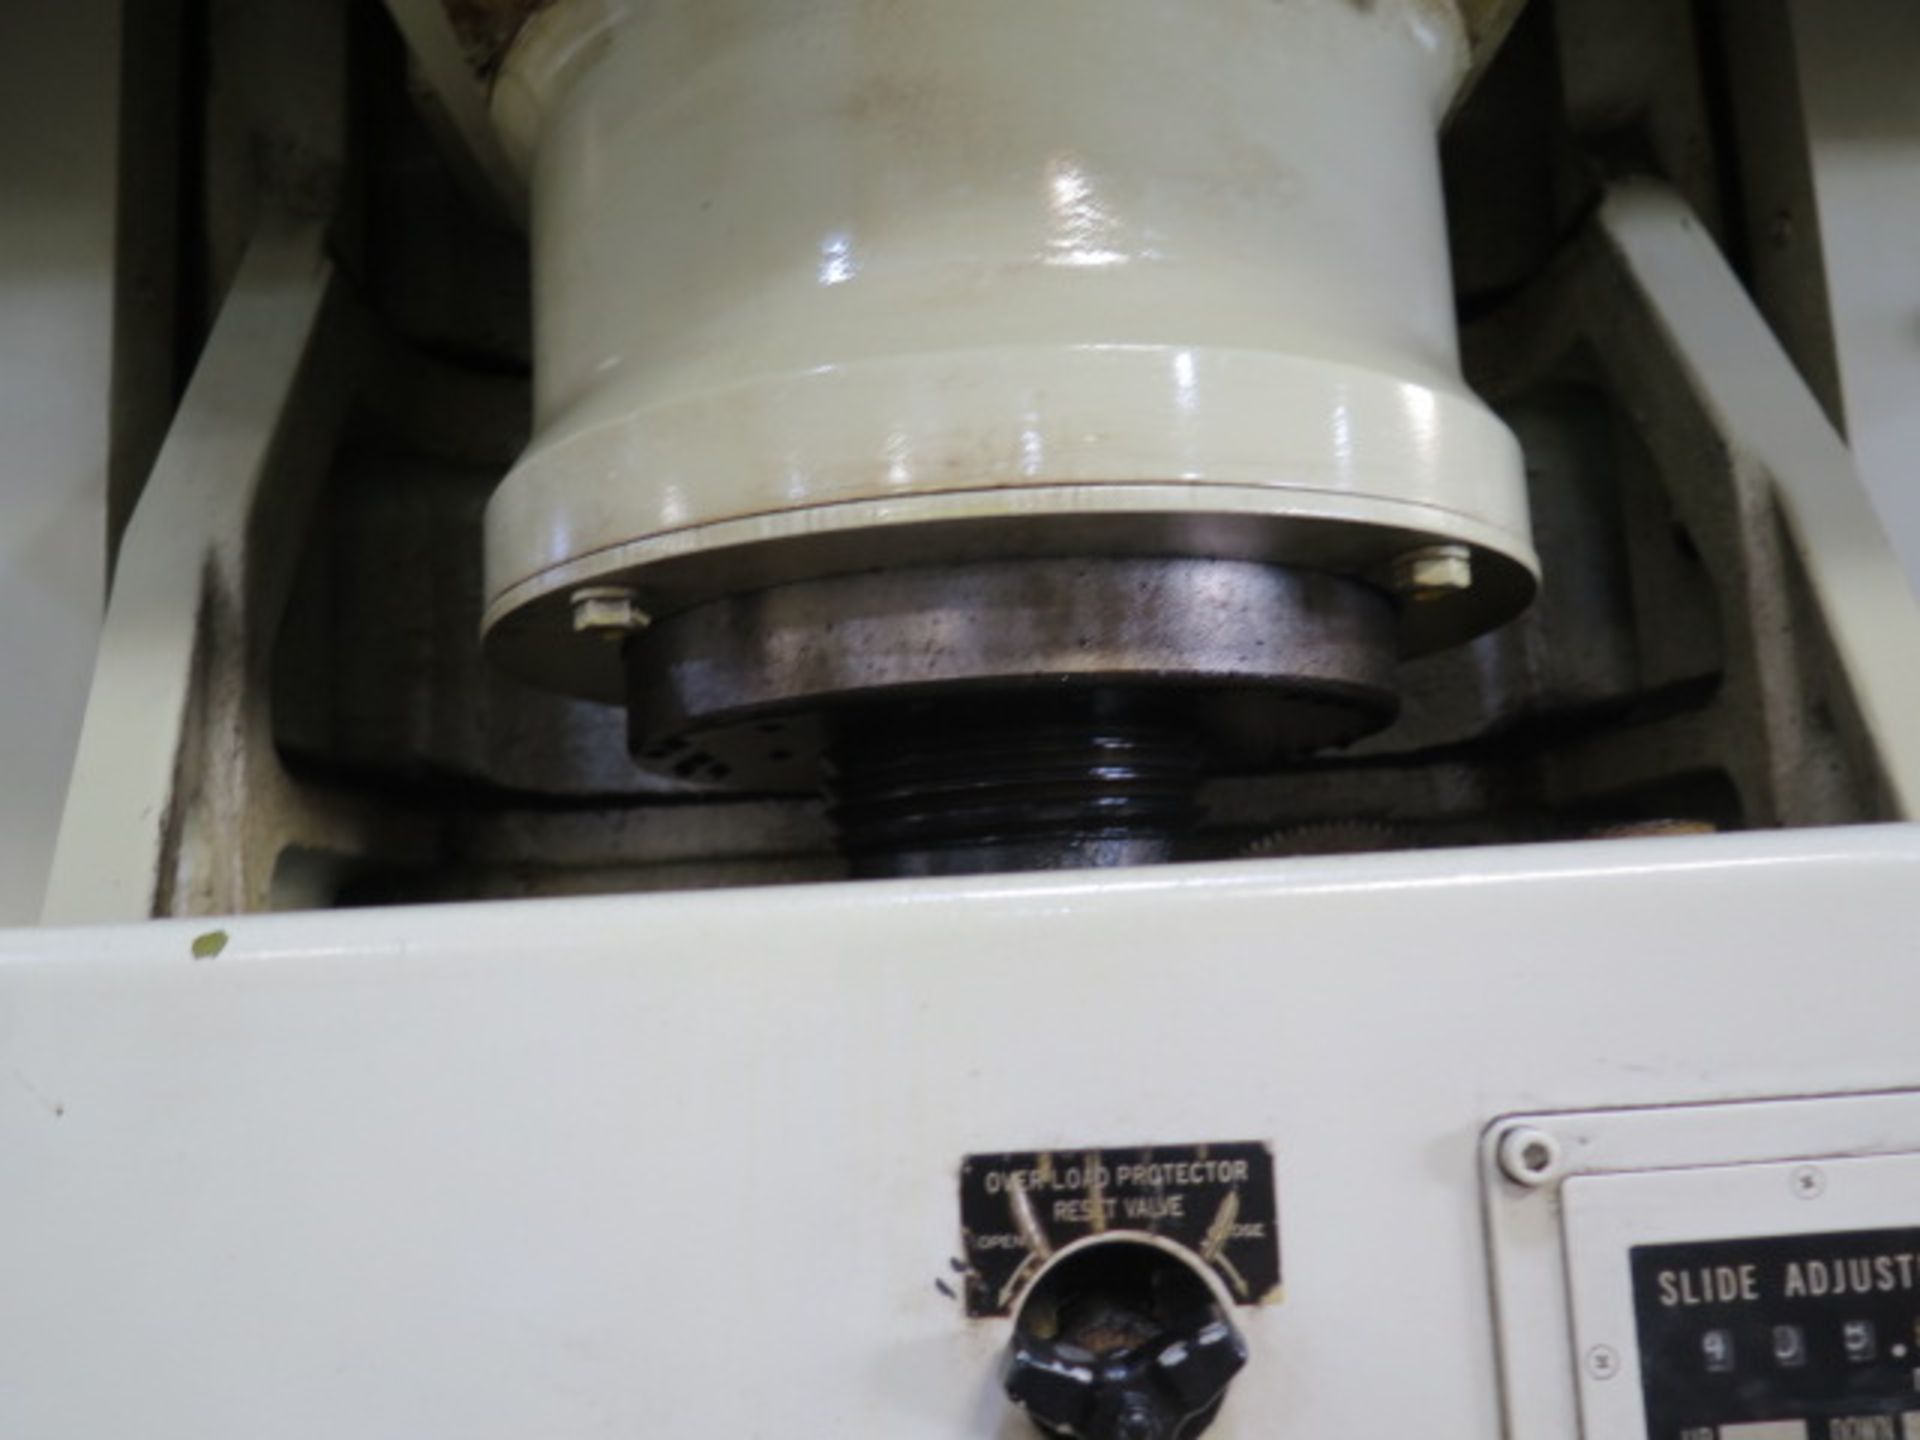 Komatsu OBS 150-3 150 Ton Gap Frame Press s/n 11140 w/ Controls, 27-55 SPM, 7.89” Stroke, SOLD AS IS - Image 10 of 23